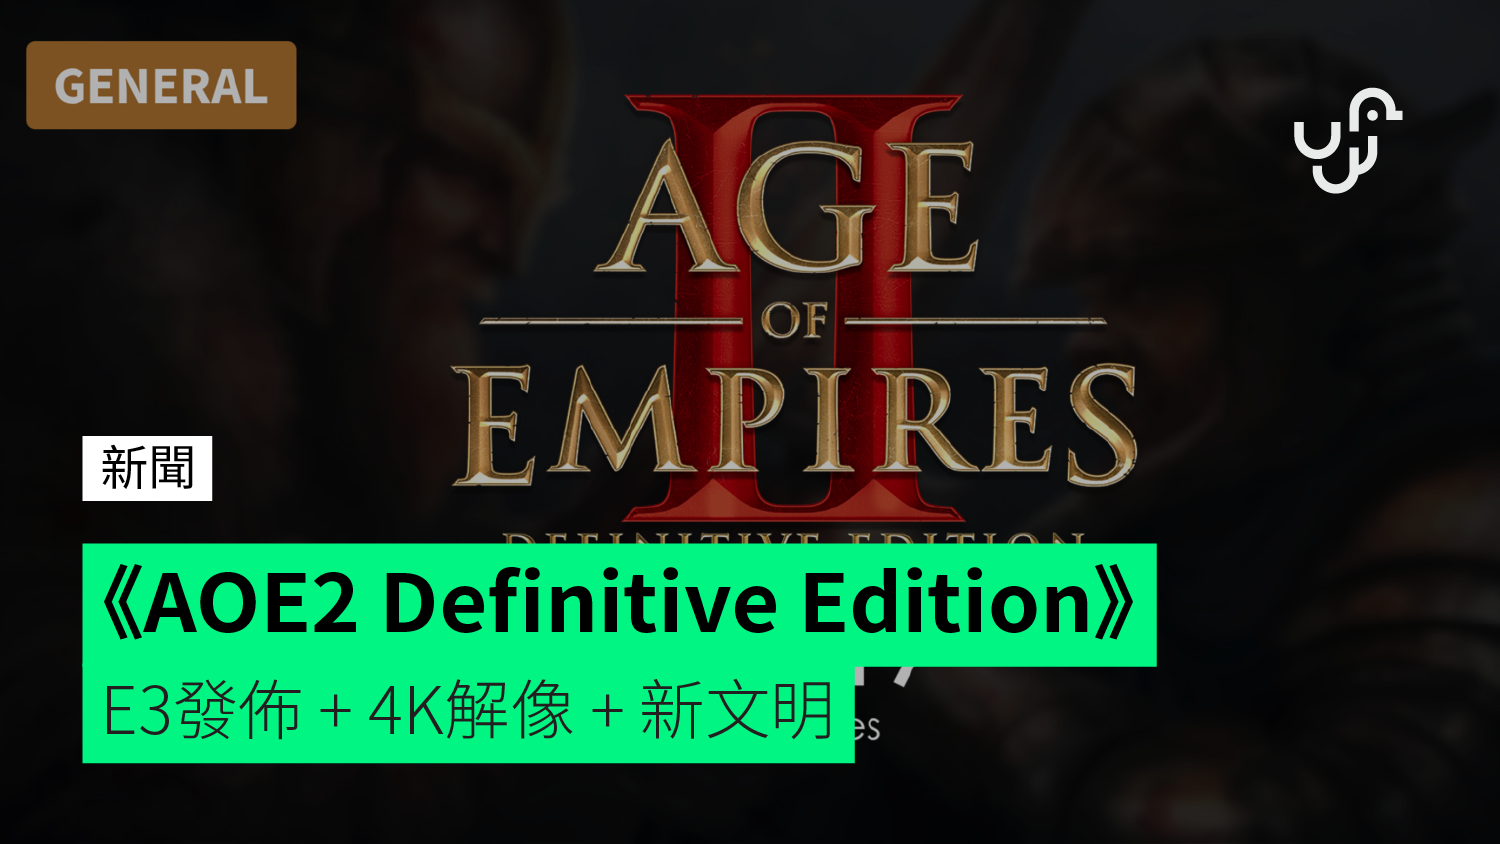 Aoe2 Definitive Edition 世紀帝國2 De版 發佈 4k解像 新文明 香港unwire Hk